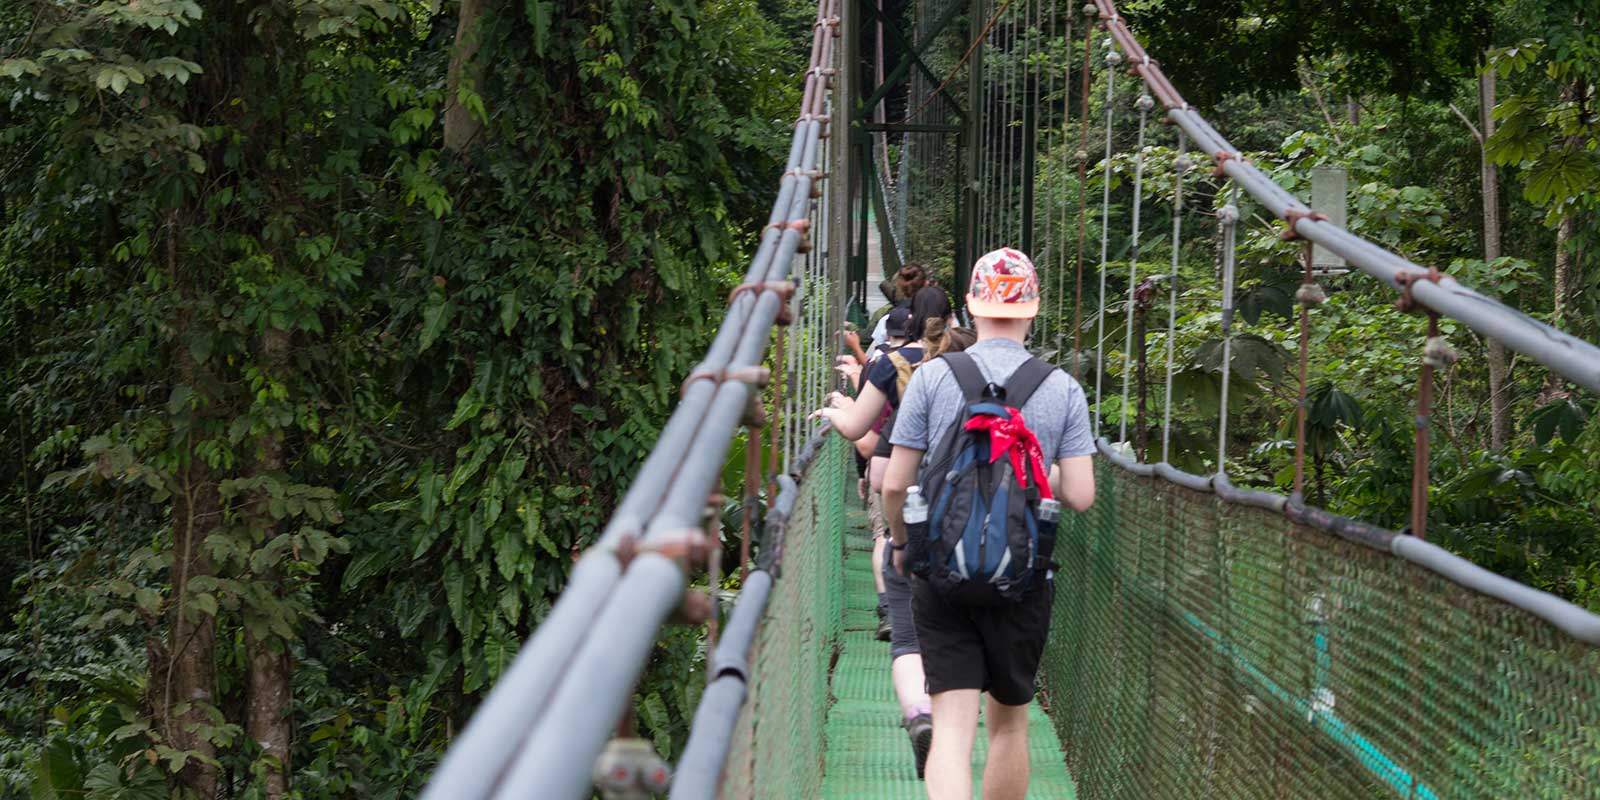 School group on canopy walkway in Costa Rican rainforest.